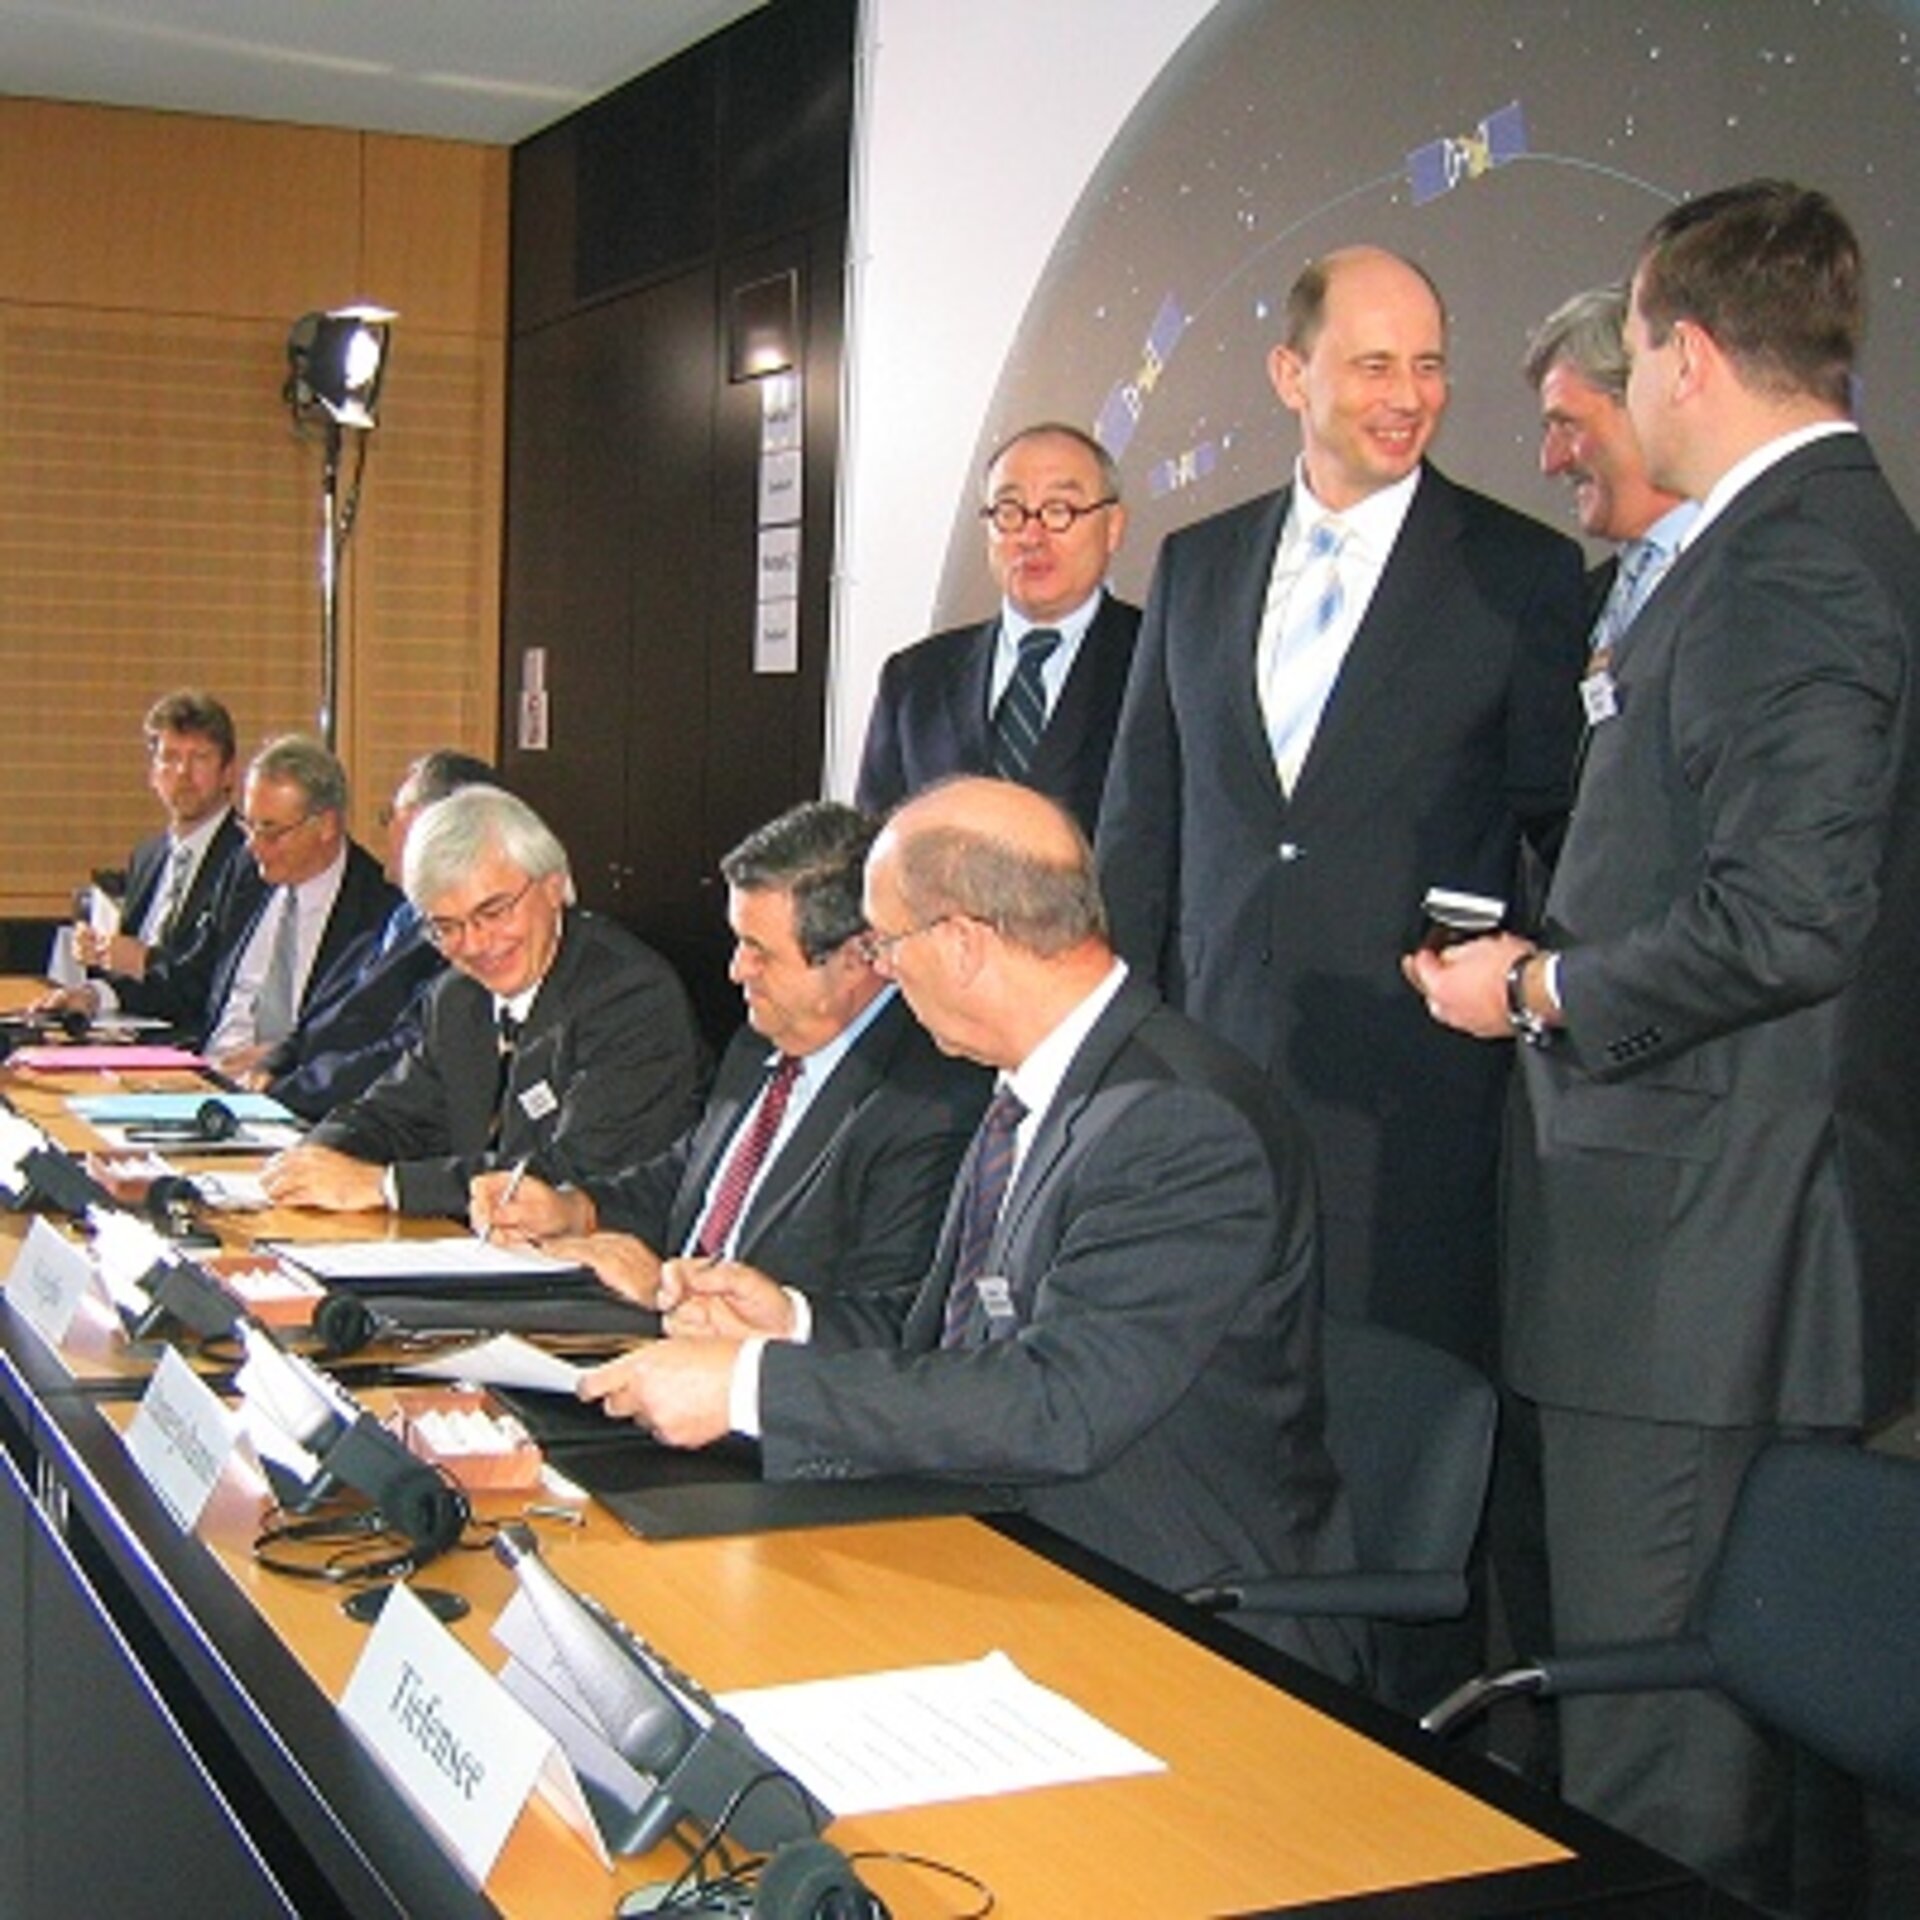 Galileo IOV contract signing